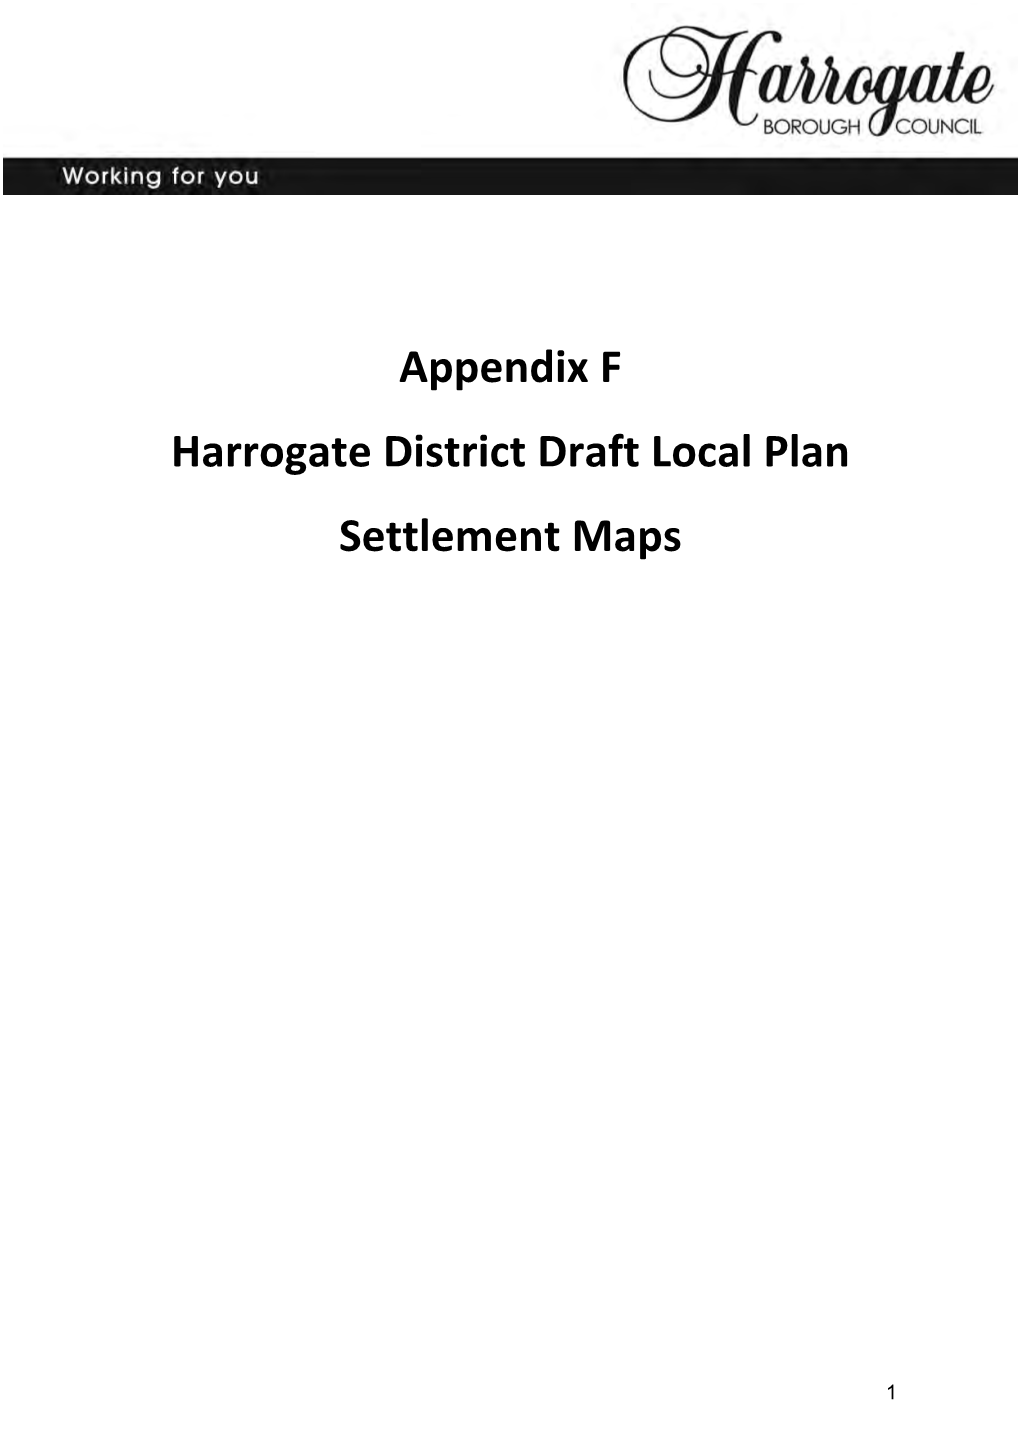 Appendix F Harrogate District Draft Local Plan Settlement Maps